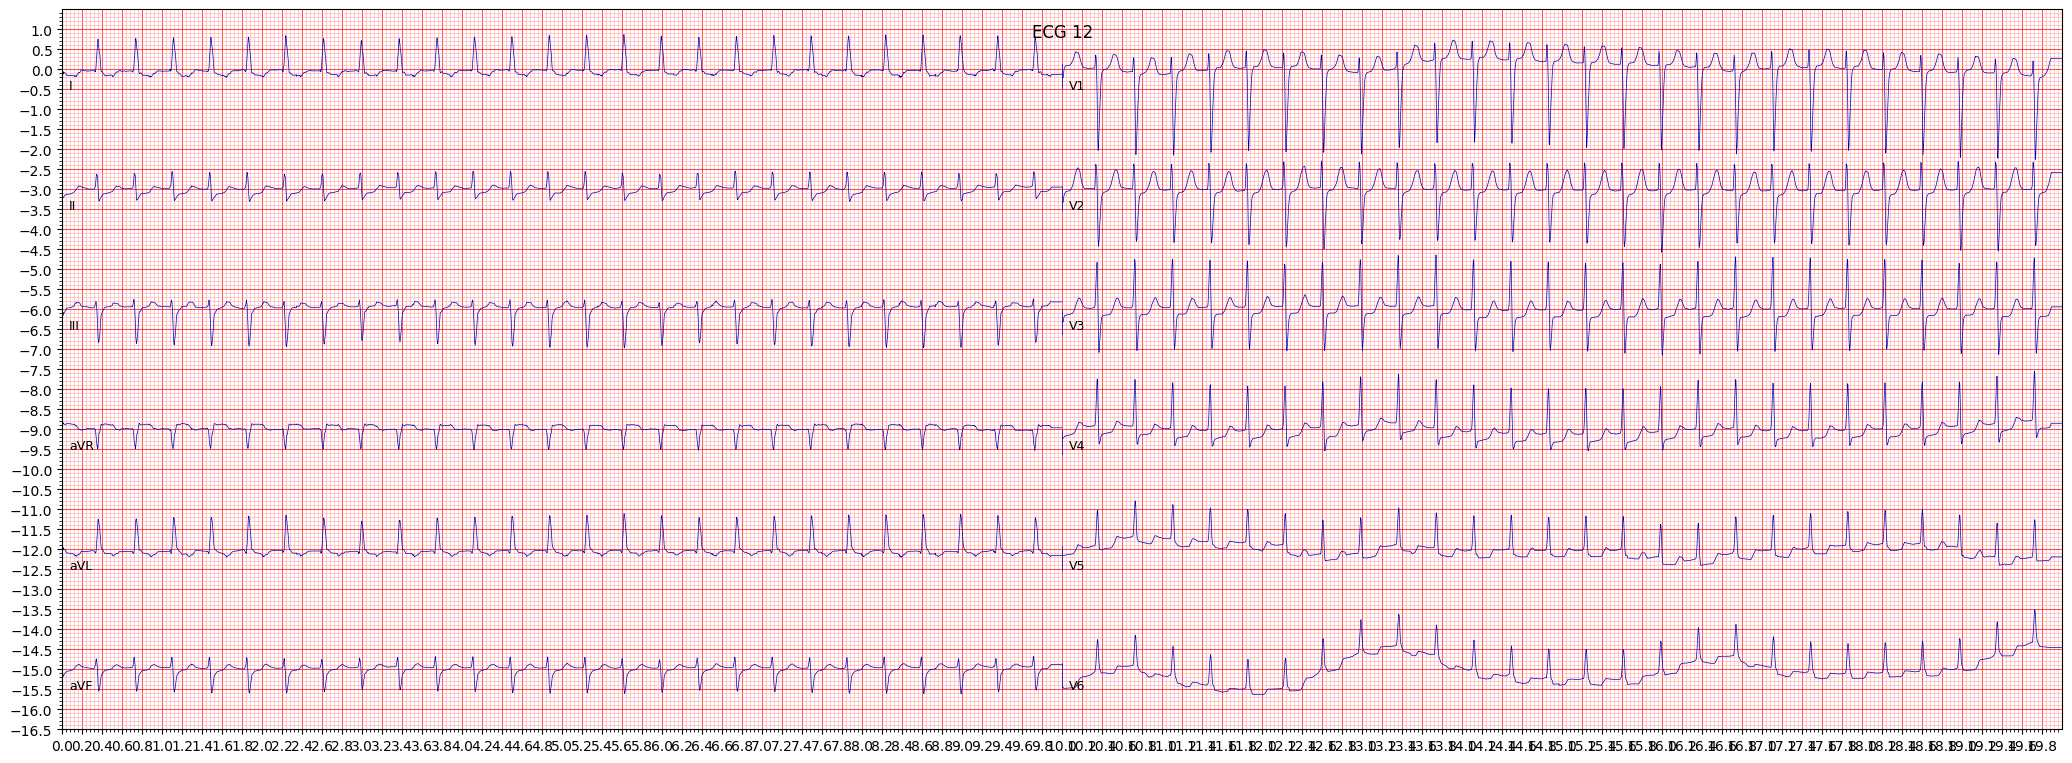 paroxysmal supraventricular tachycardia (PSVT) example 3267